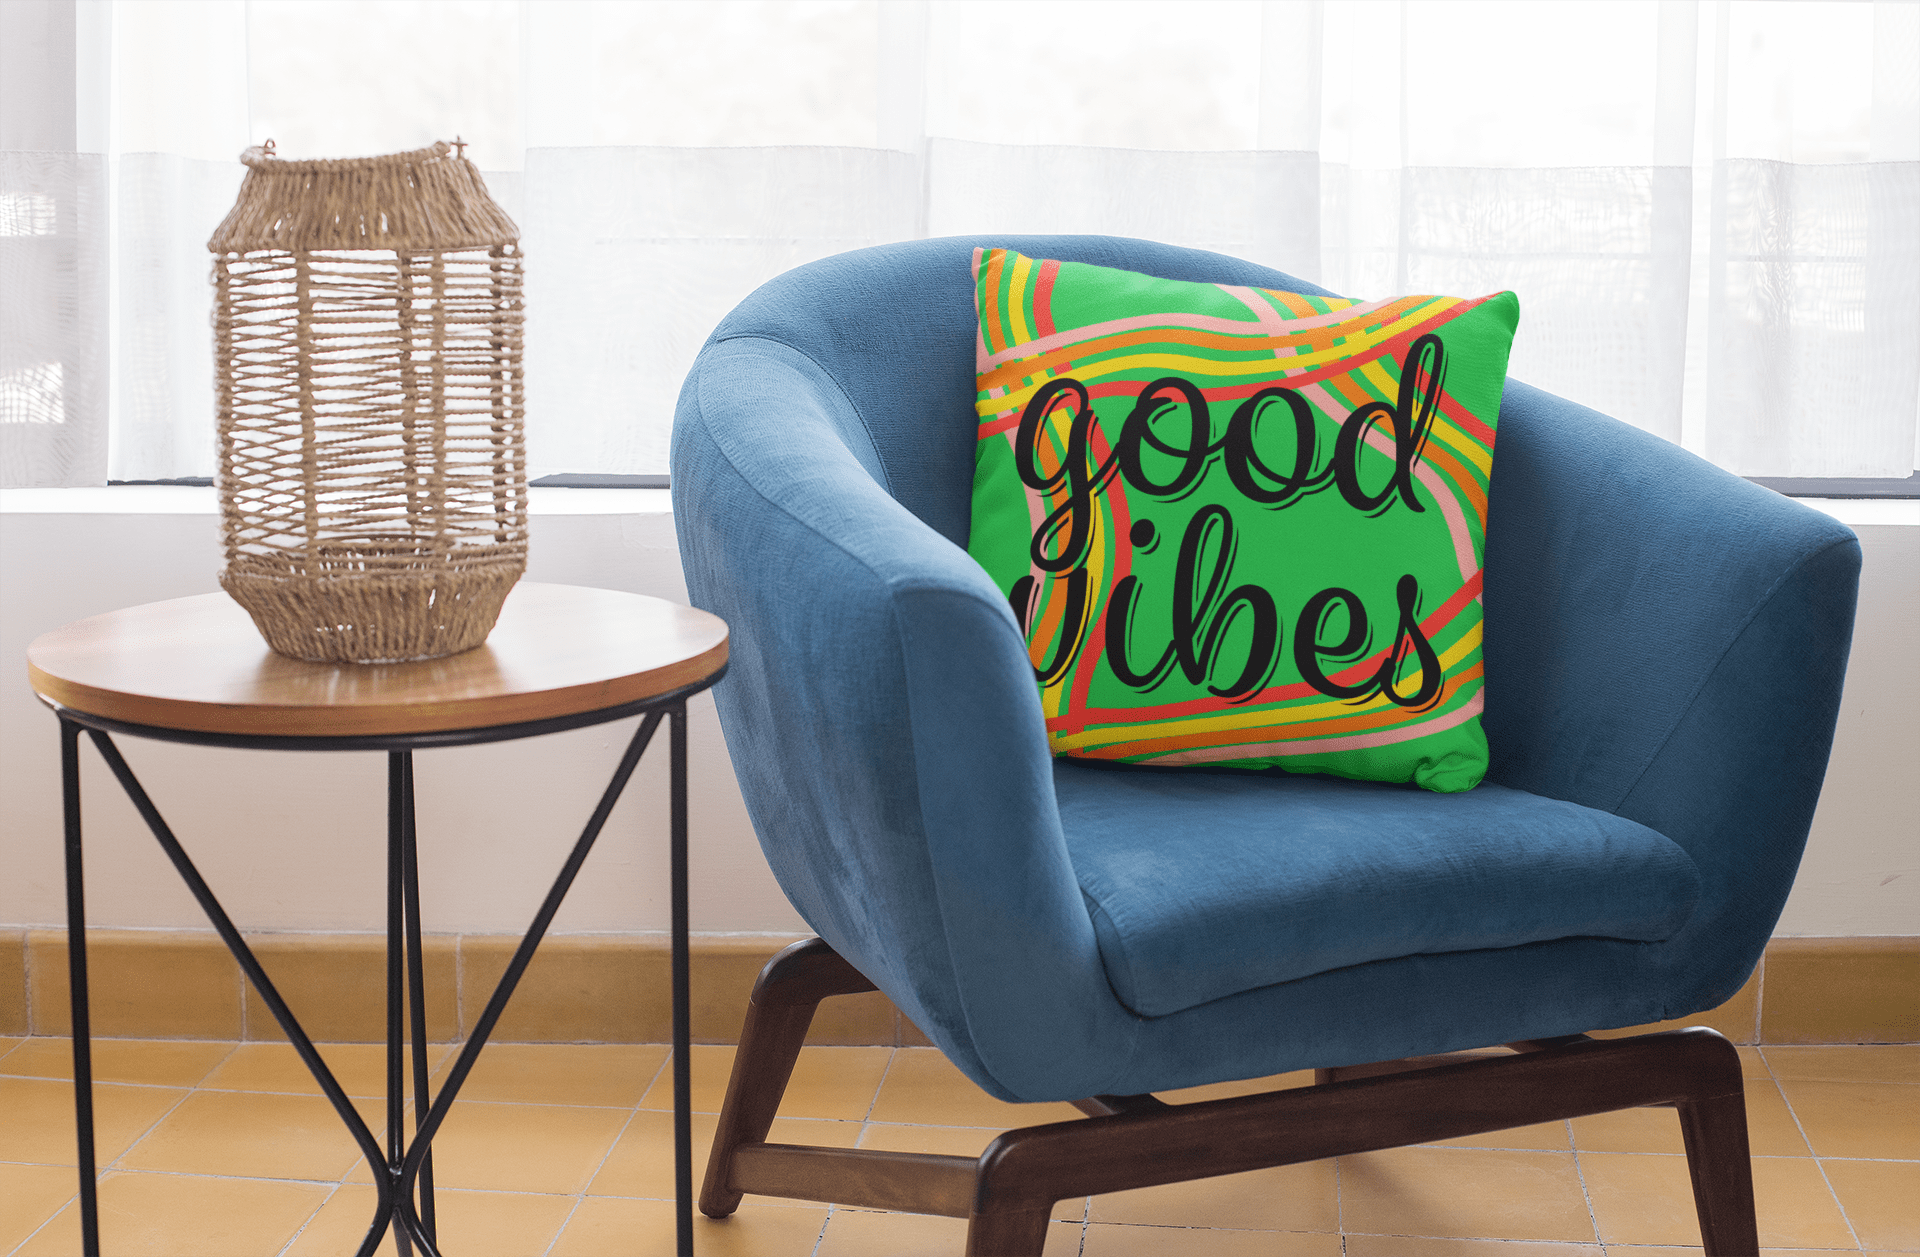 Shop Good Vibes Waves Decorative Throw Pillow - Lime Green, Pillow, USA Boutique